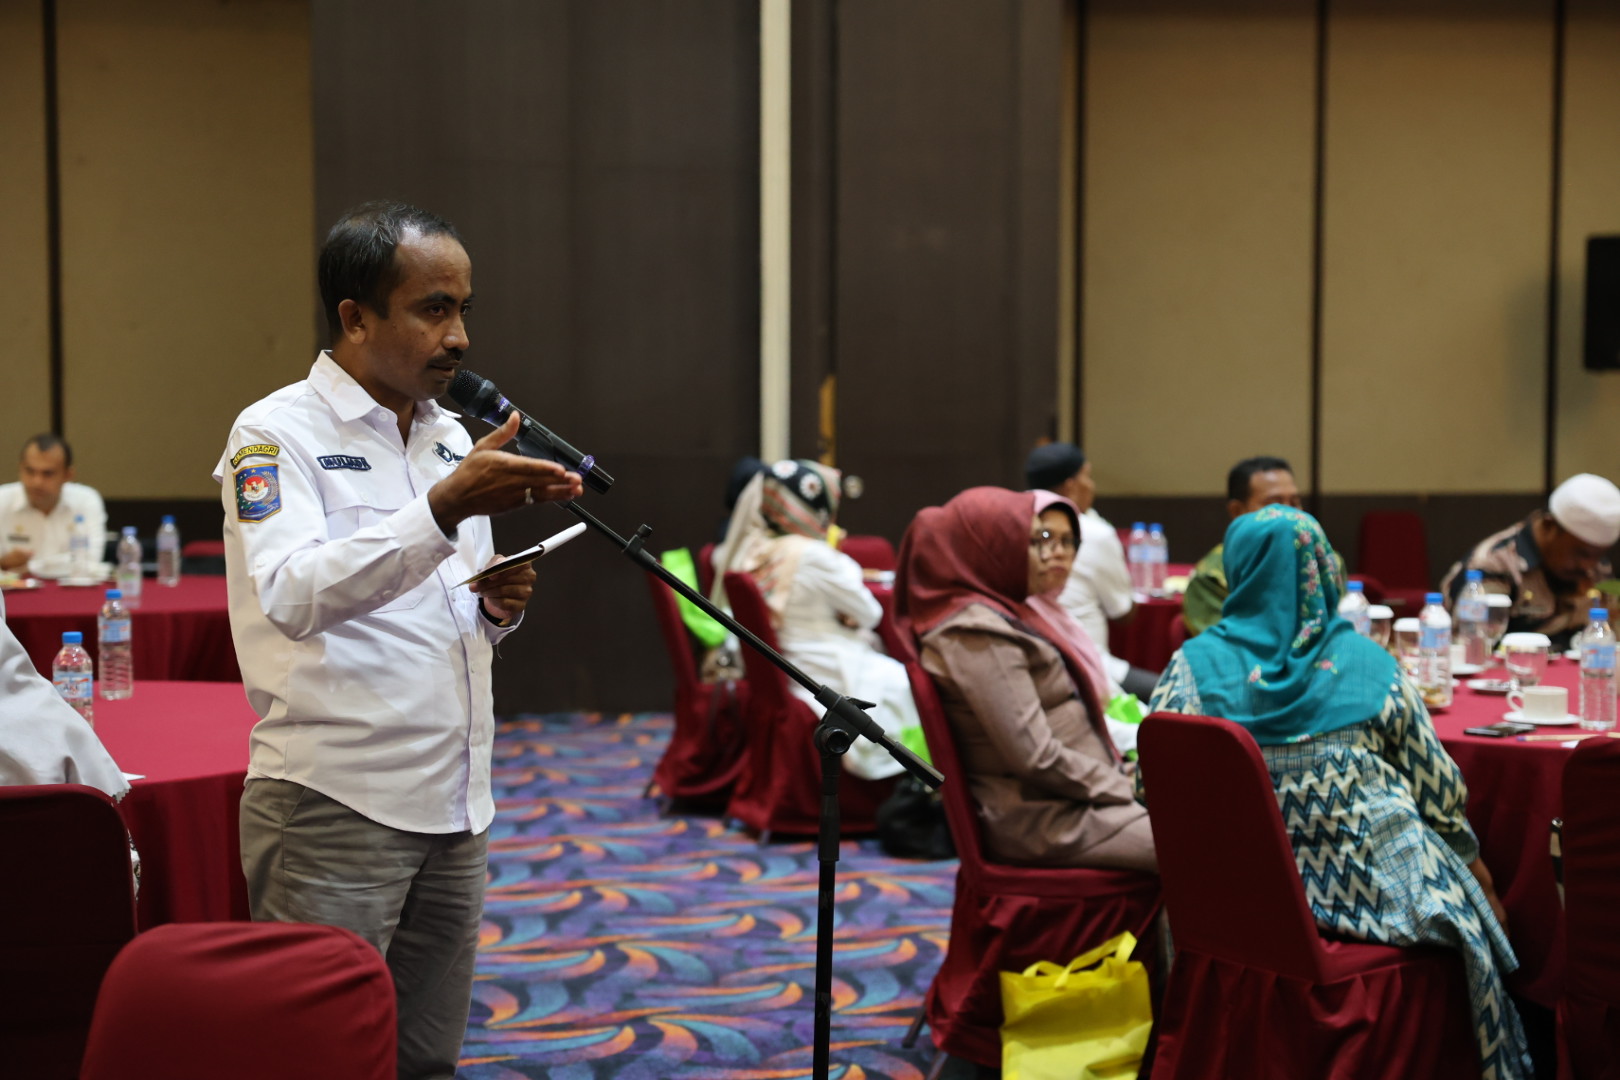 ANRI Gelar Rakorda Pembinaan SDM Kearsipan Se-Provinsi Maluku Utara